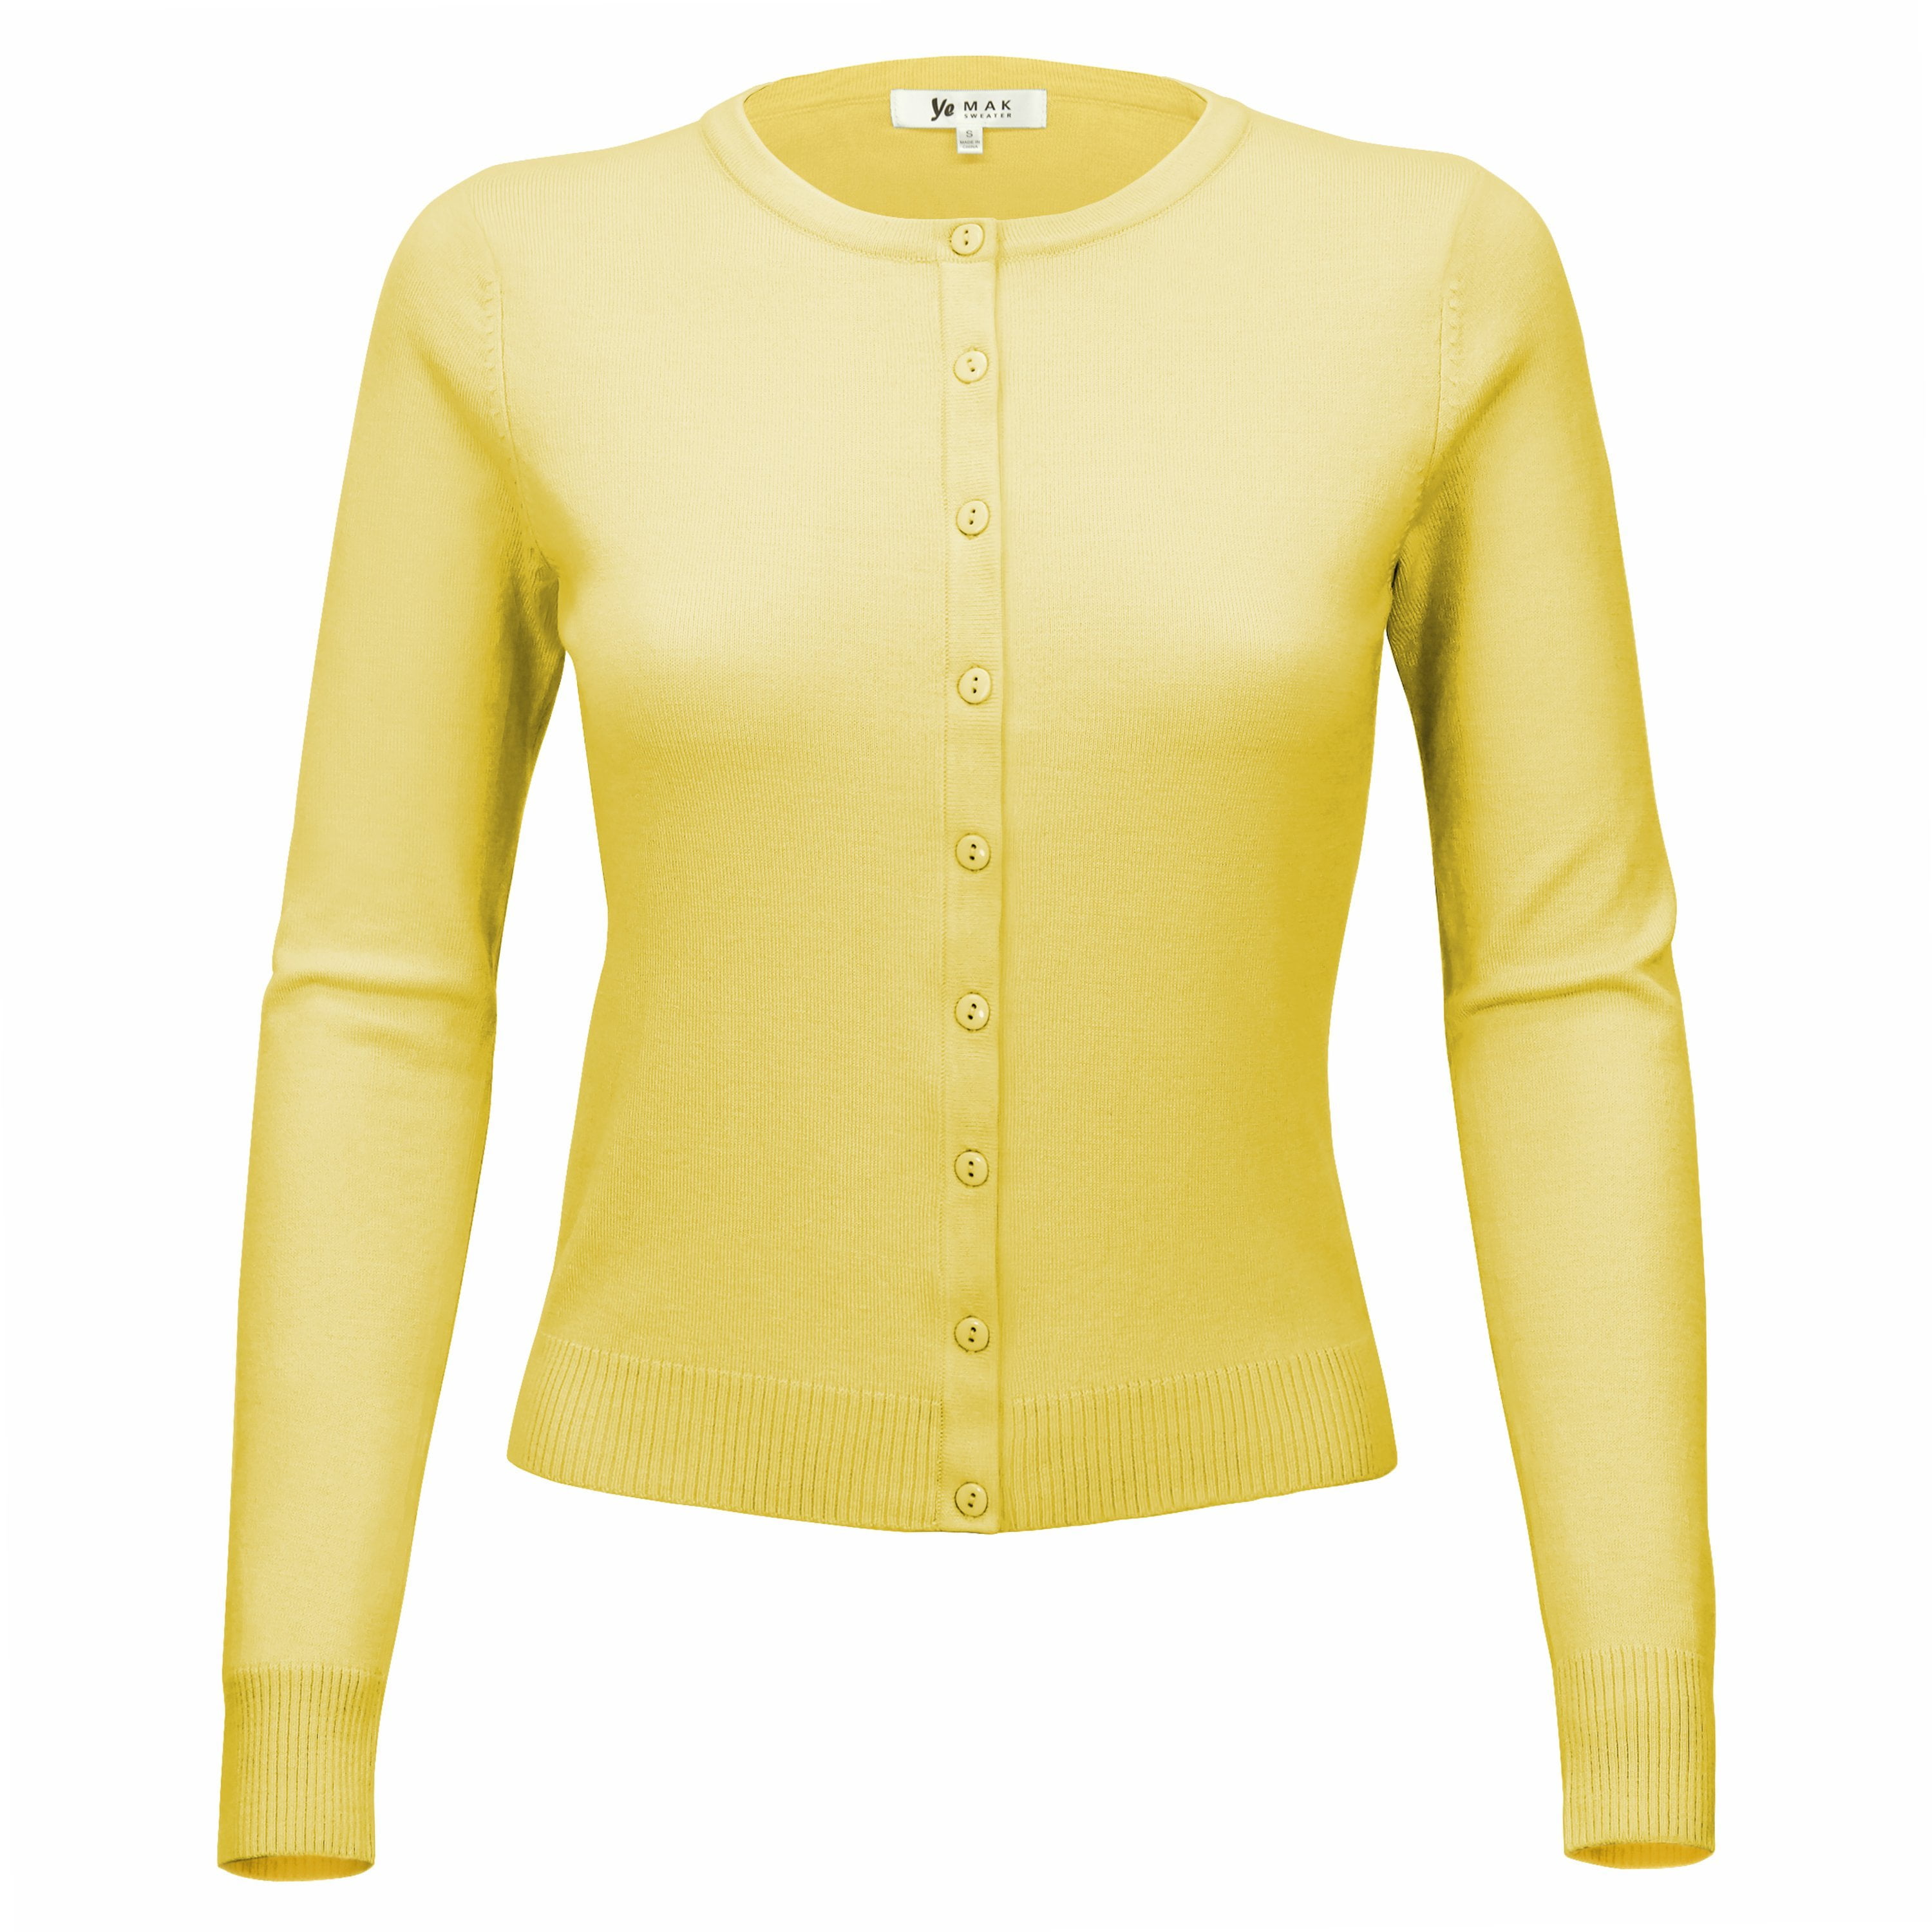 YEMAK Women's Knit Cardigan Sweater – Long Sleeve Crewneck Basic Classic Casual Button Down Soft Lightweight Knitted Top